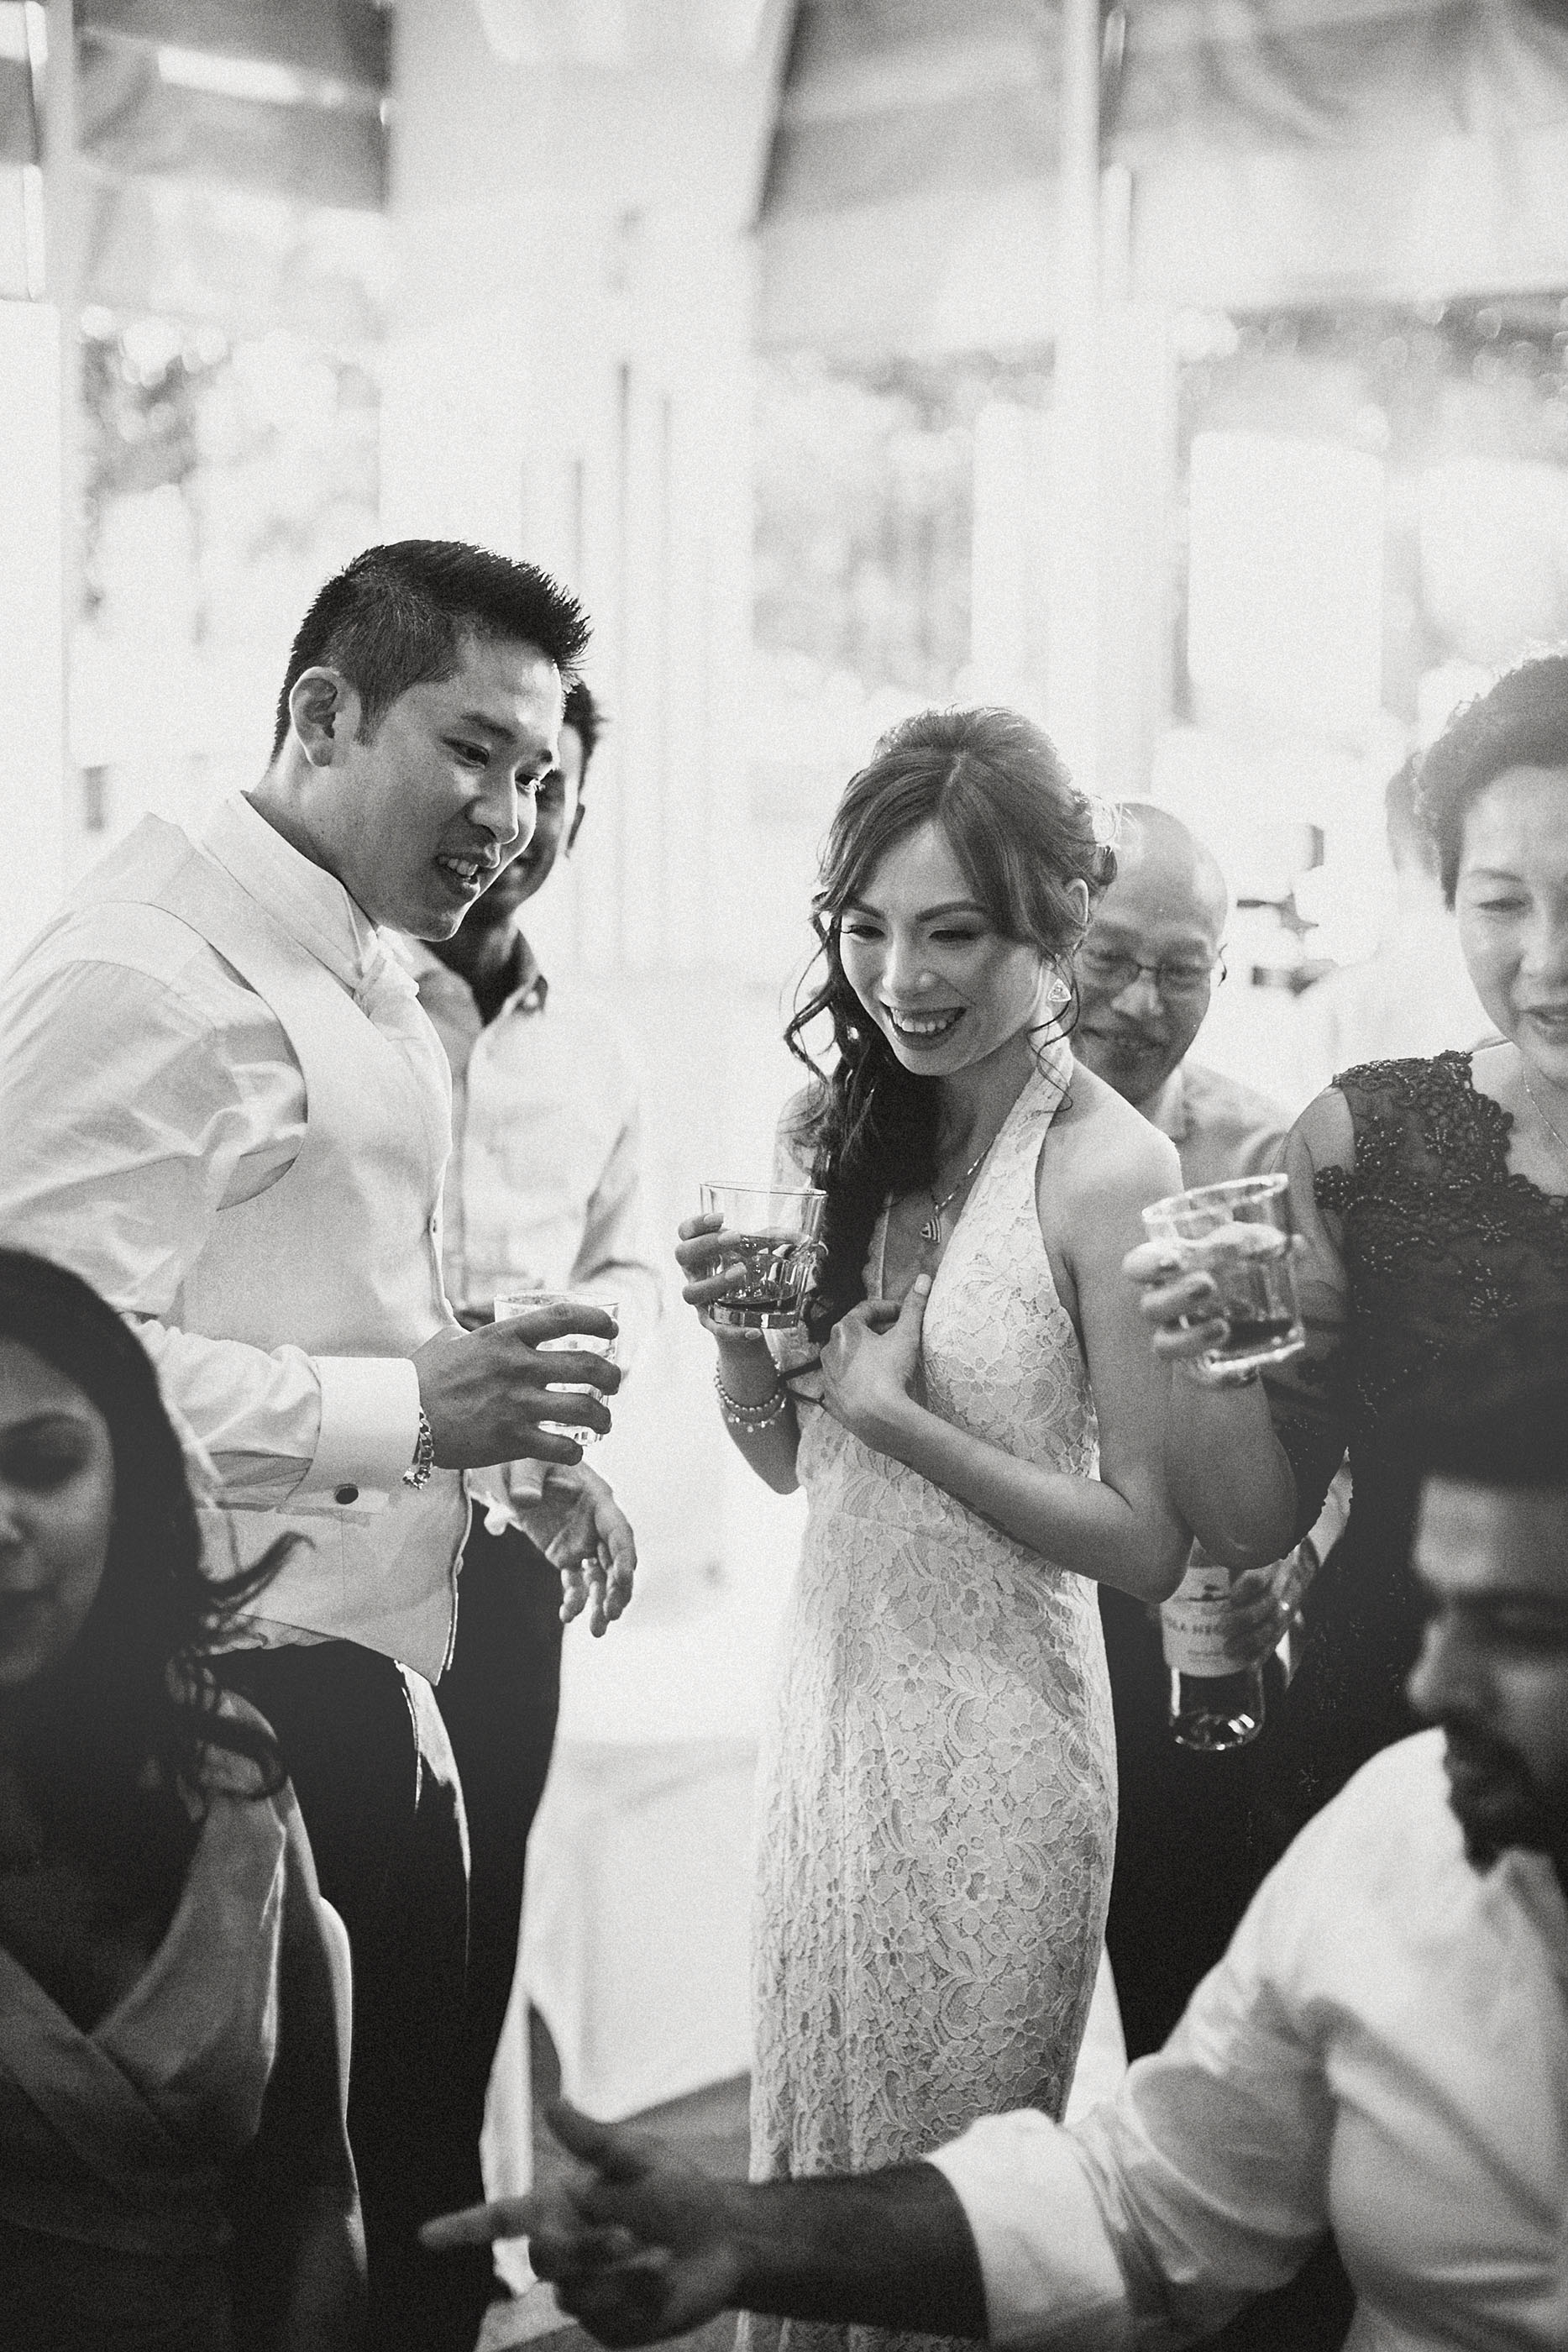 nicholas-lau-photo-photography-fine-art-film-wedding-london-asian-chinese-uk-mulitcultural-ceremony-reception-couple-toasting-guests-china-boulevard